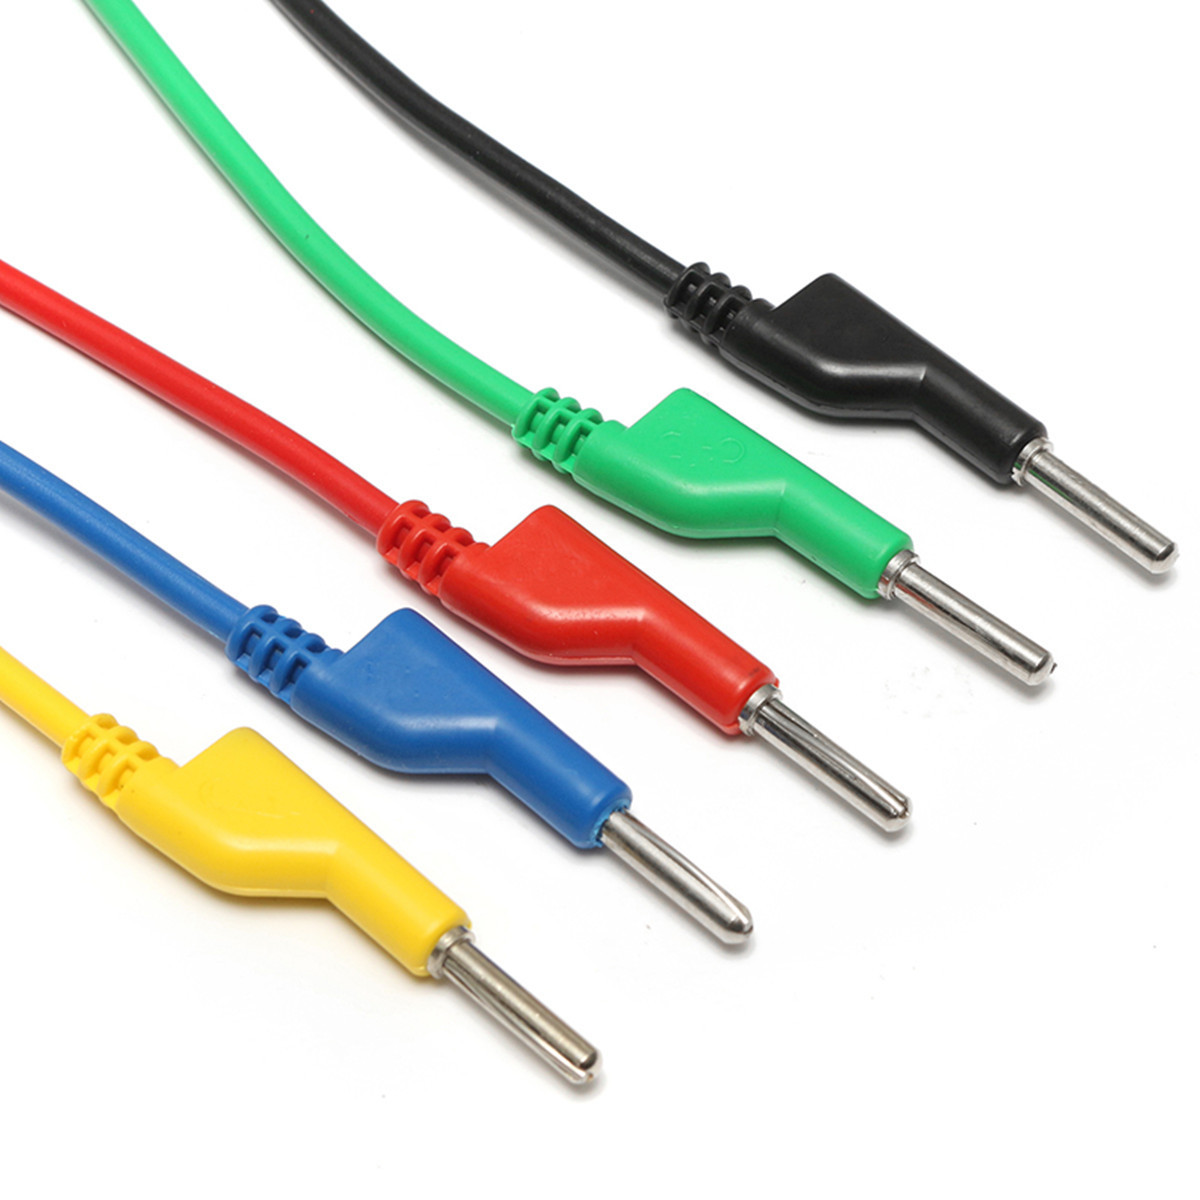 DANIU-5Pcs-5-Colors-Silicone-Banana-to-Banana-Plugs-Test-Probe-Leads-Cable-1157614-5